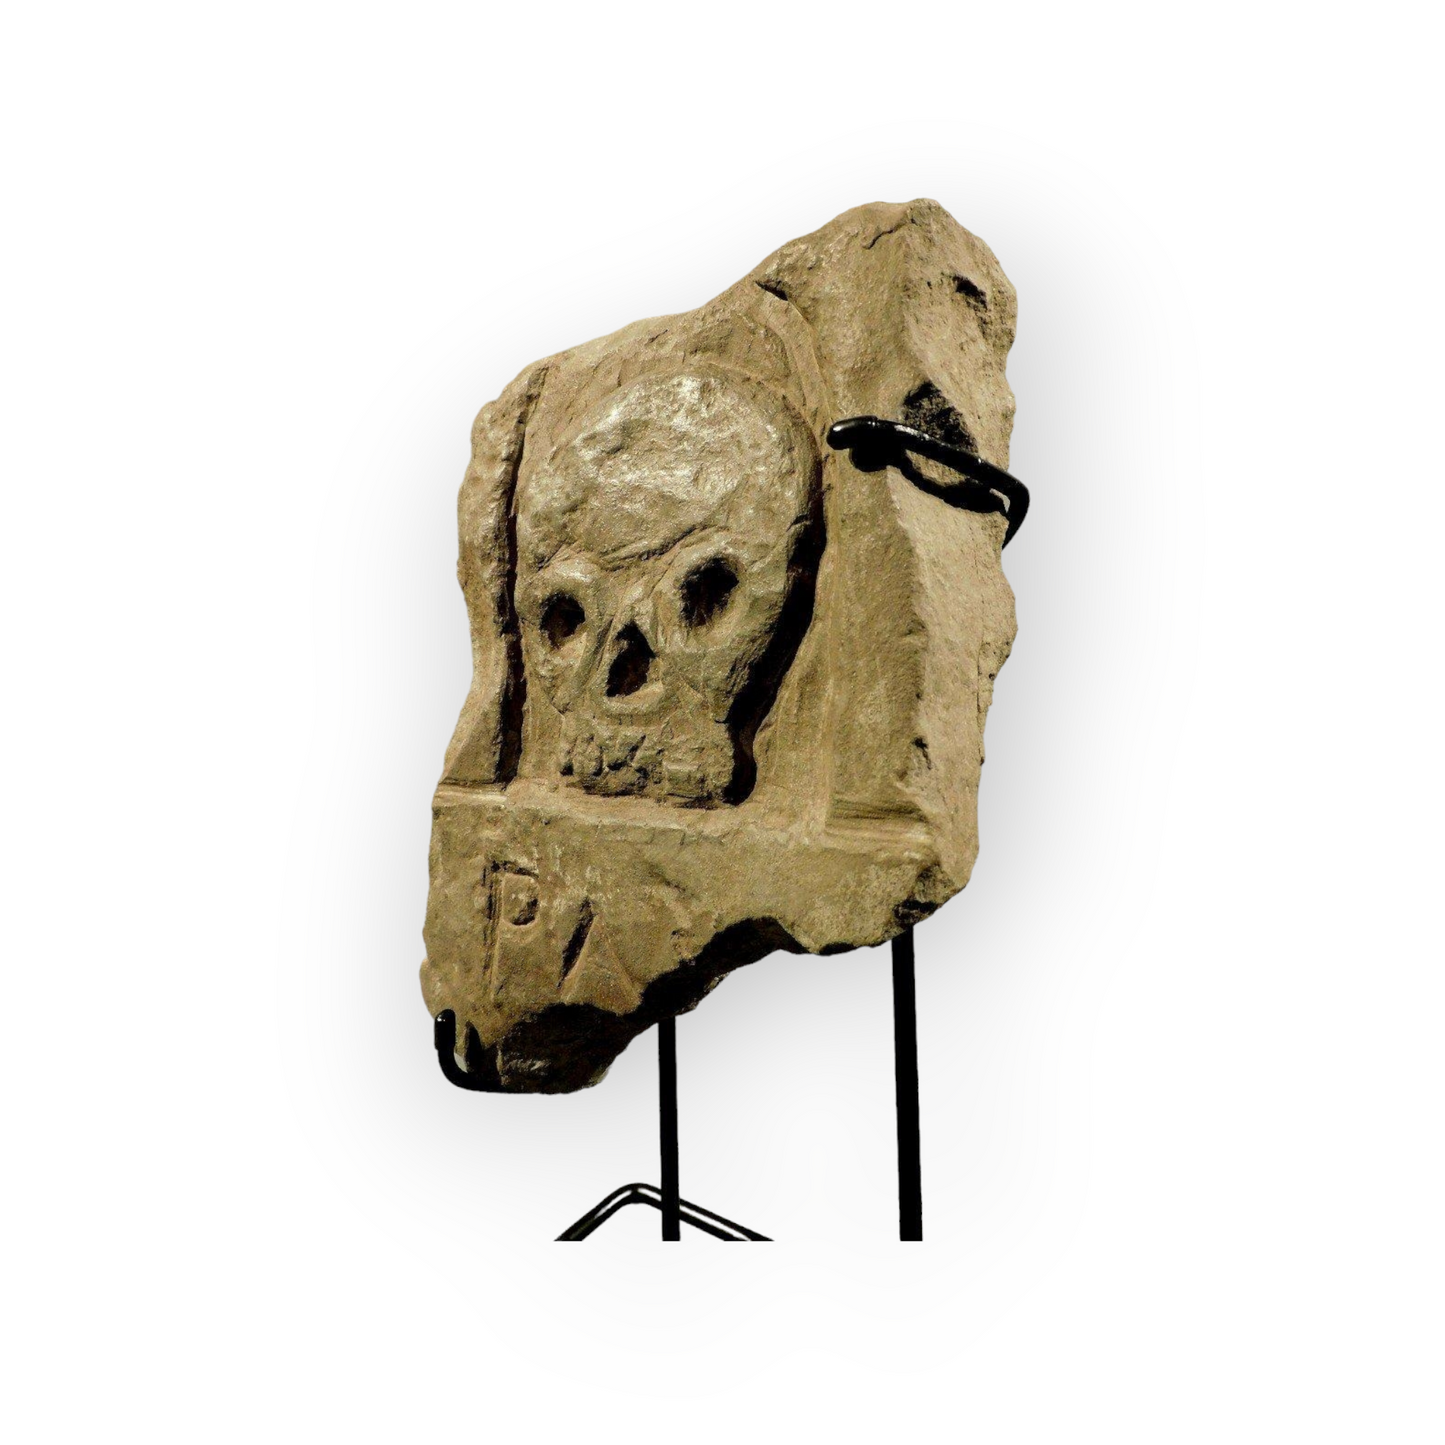 16th Century Italian Antique Carved Stone Memento Mori - Possibly a Gravestone Fragment